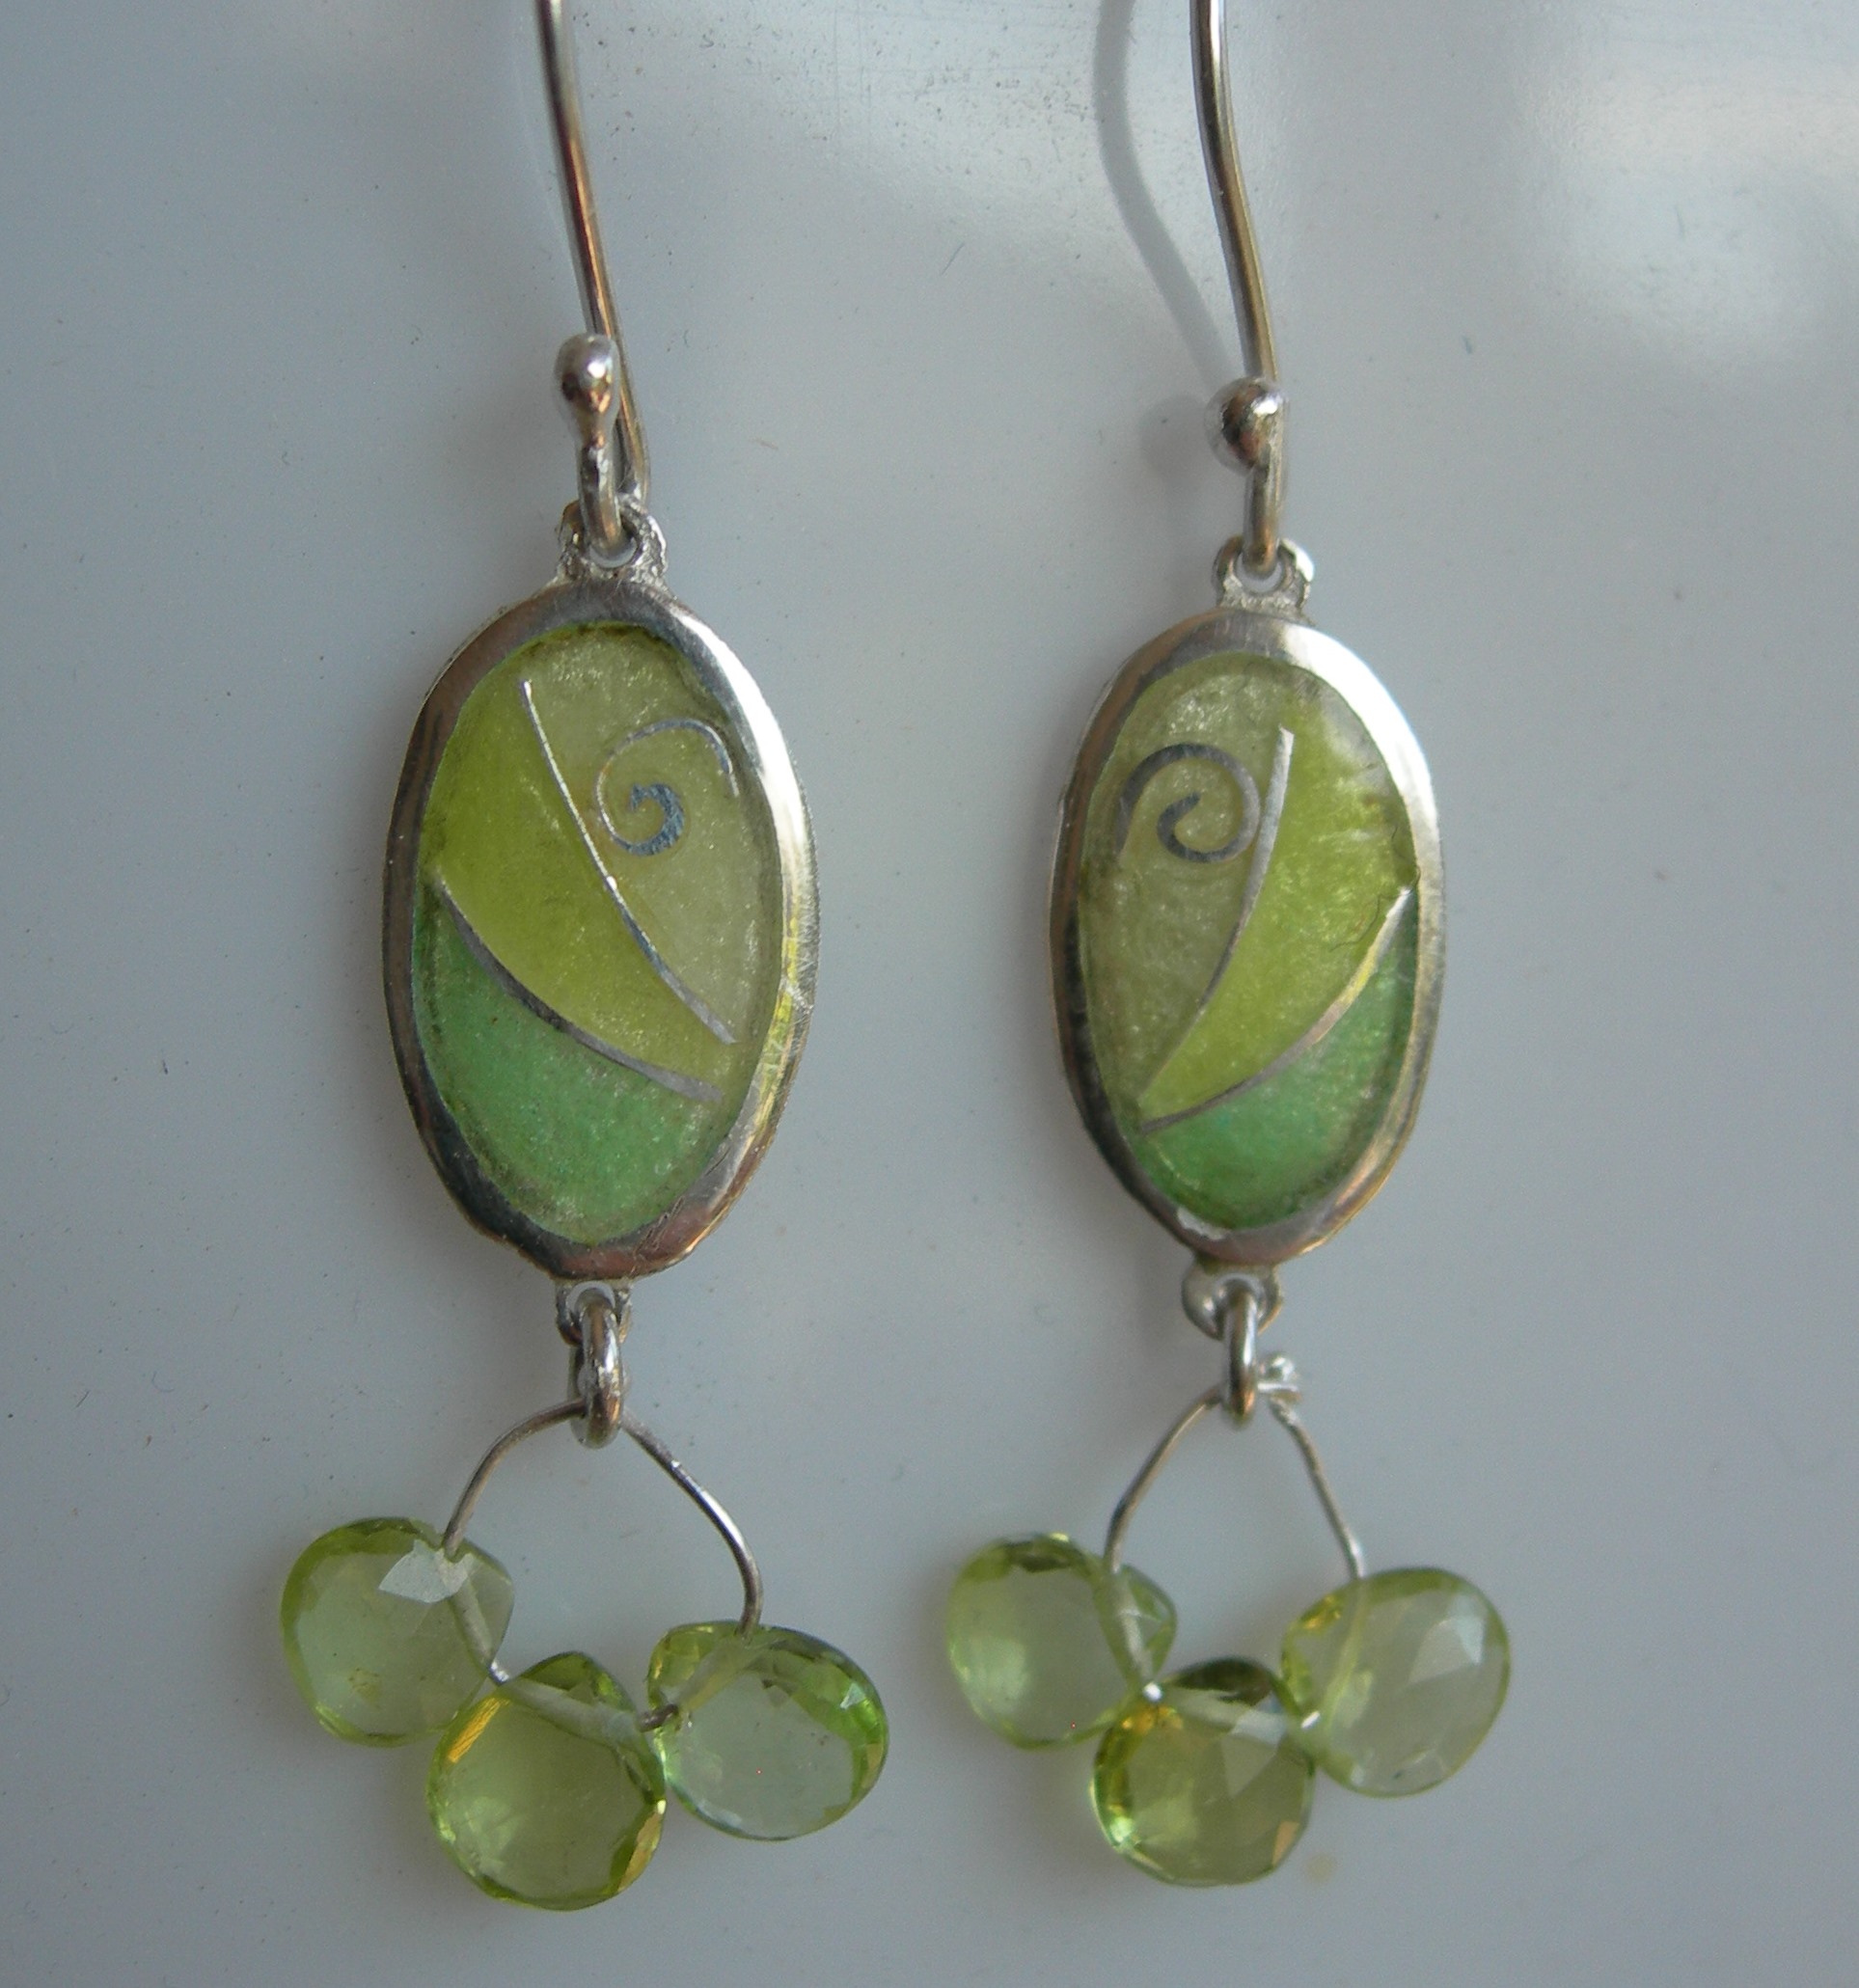 Chartreuse oval earrings in sterling silver